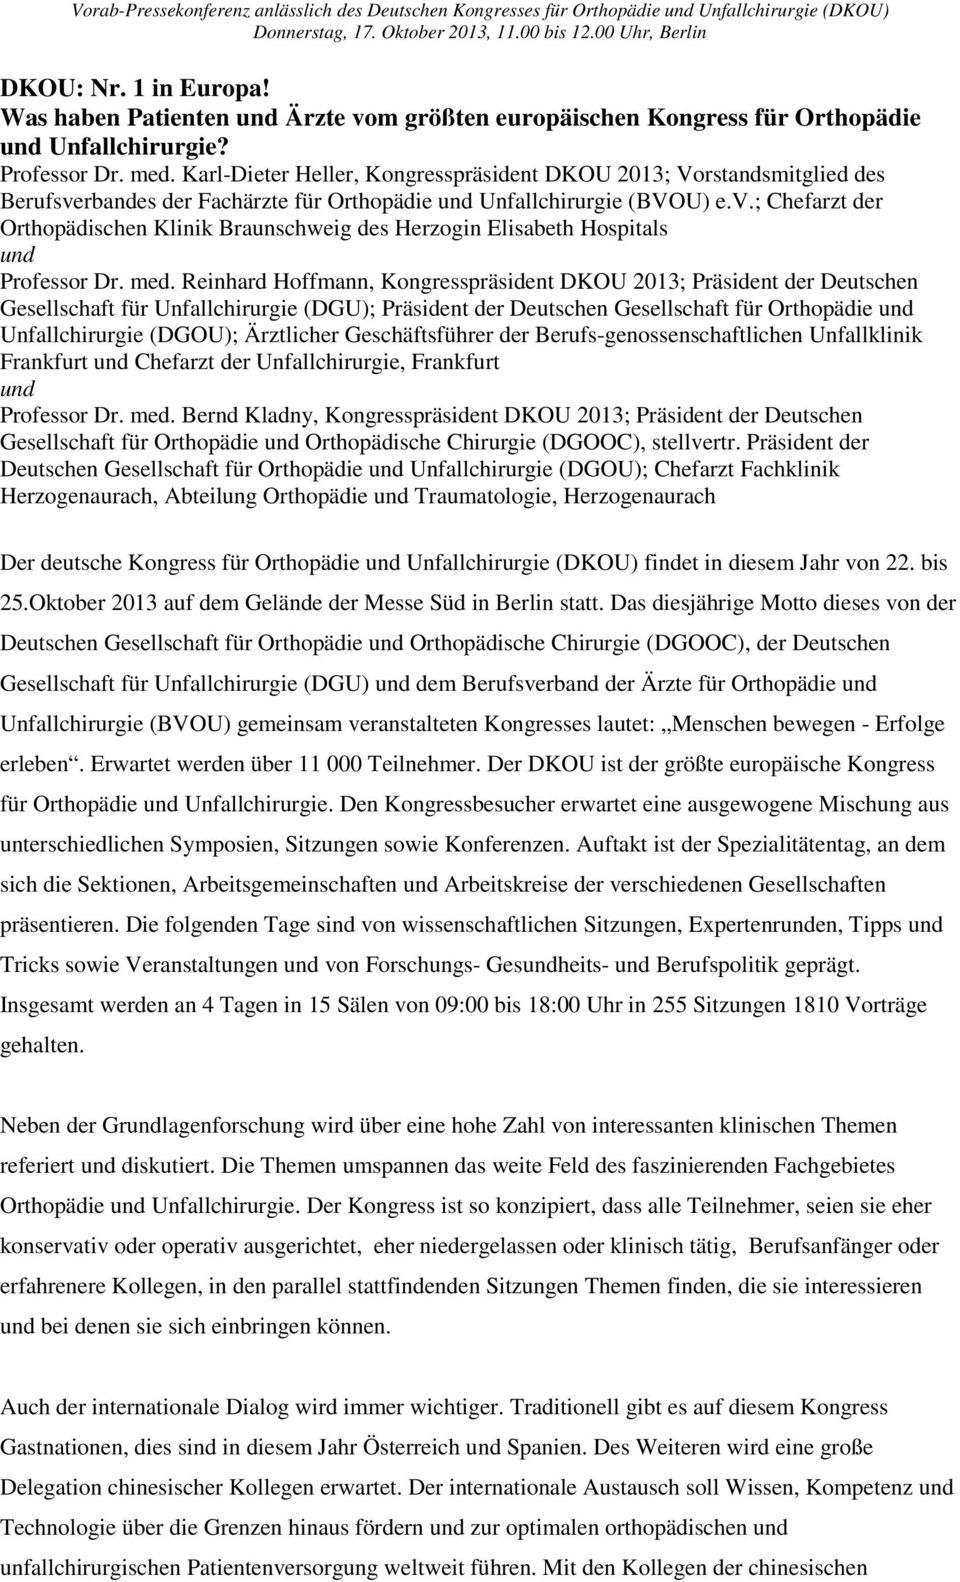 med. Reinhard Hoffmann, Kongresspräsident DKOU 2013; Präsident der Deutschen Gesellschaft für Unfallchirurgie (DGU); Präsident der Deutschen Gesellschaft für Orthopädie und Unfallchirurgie (DGOU);